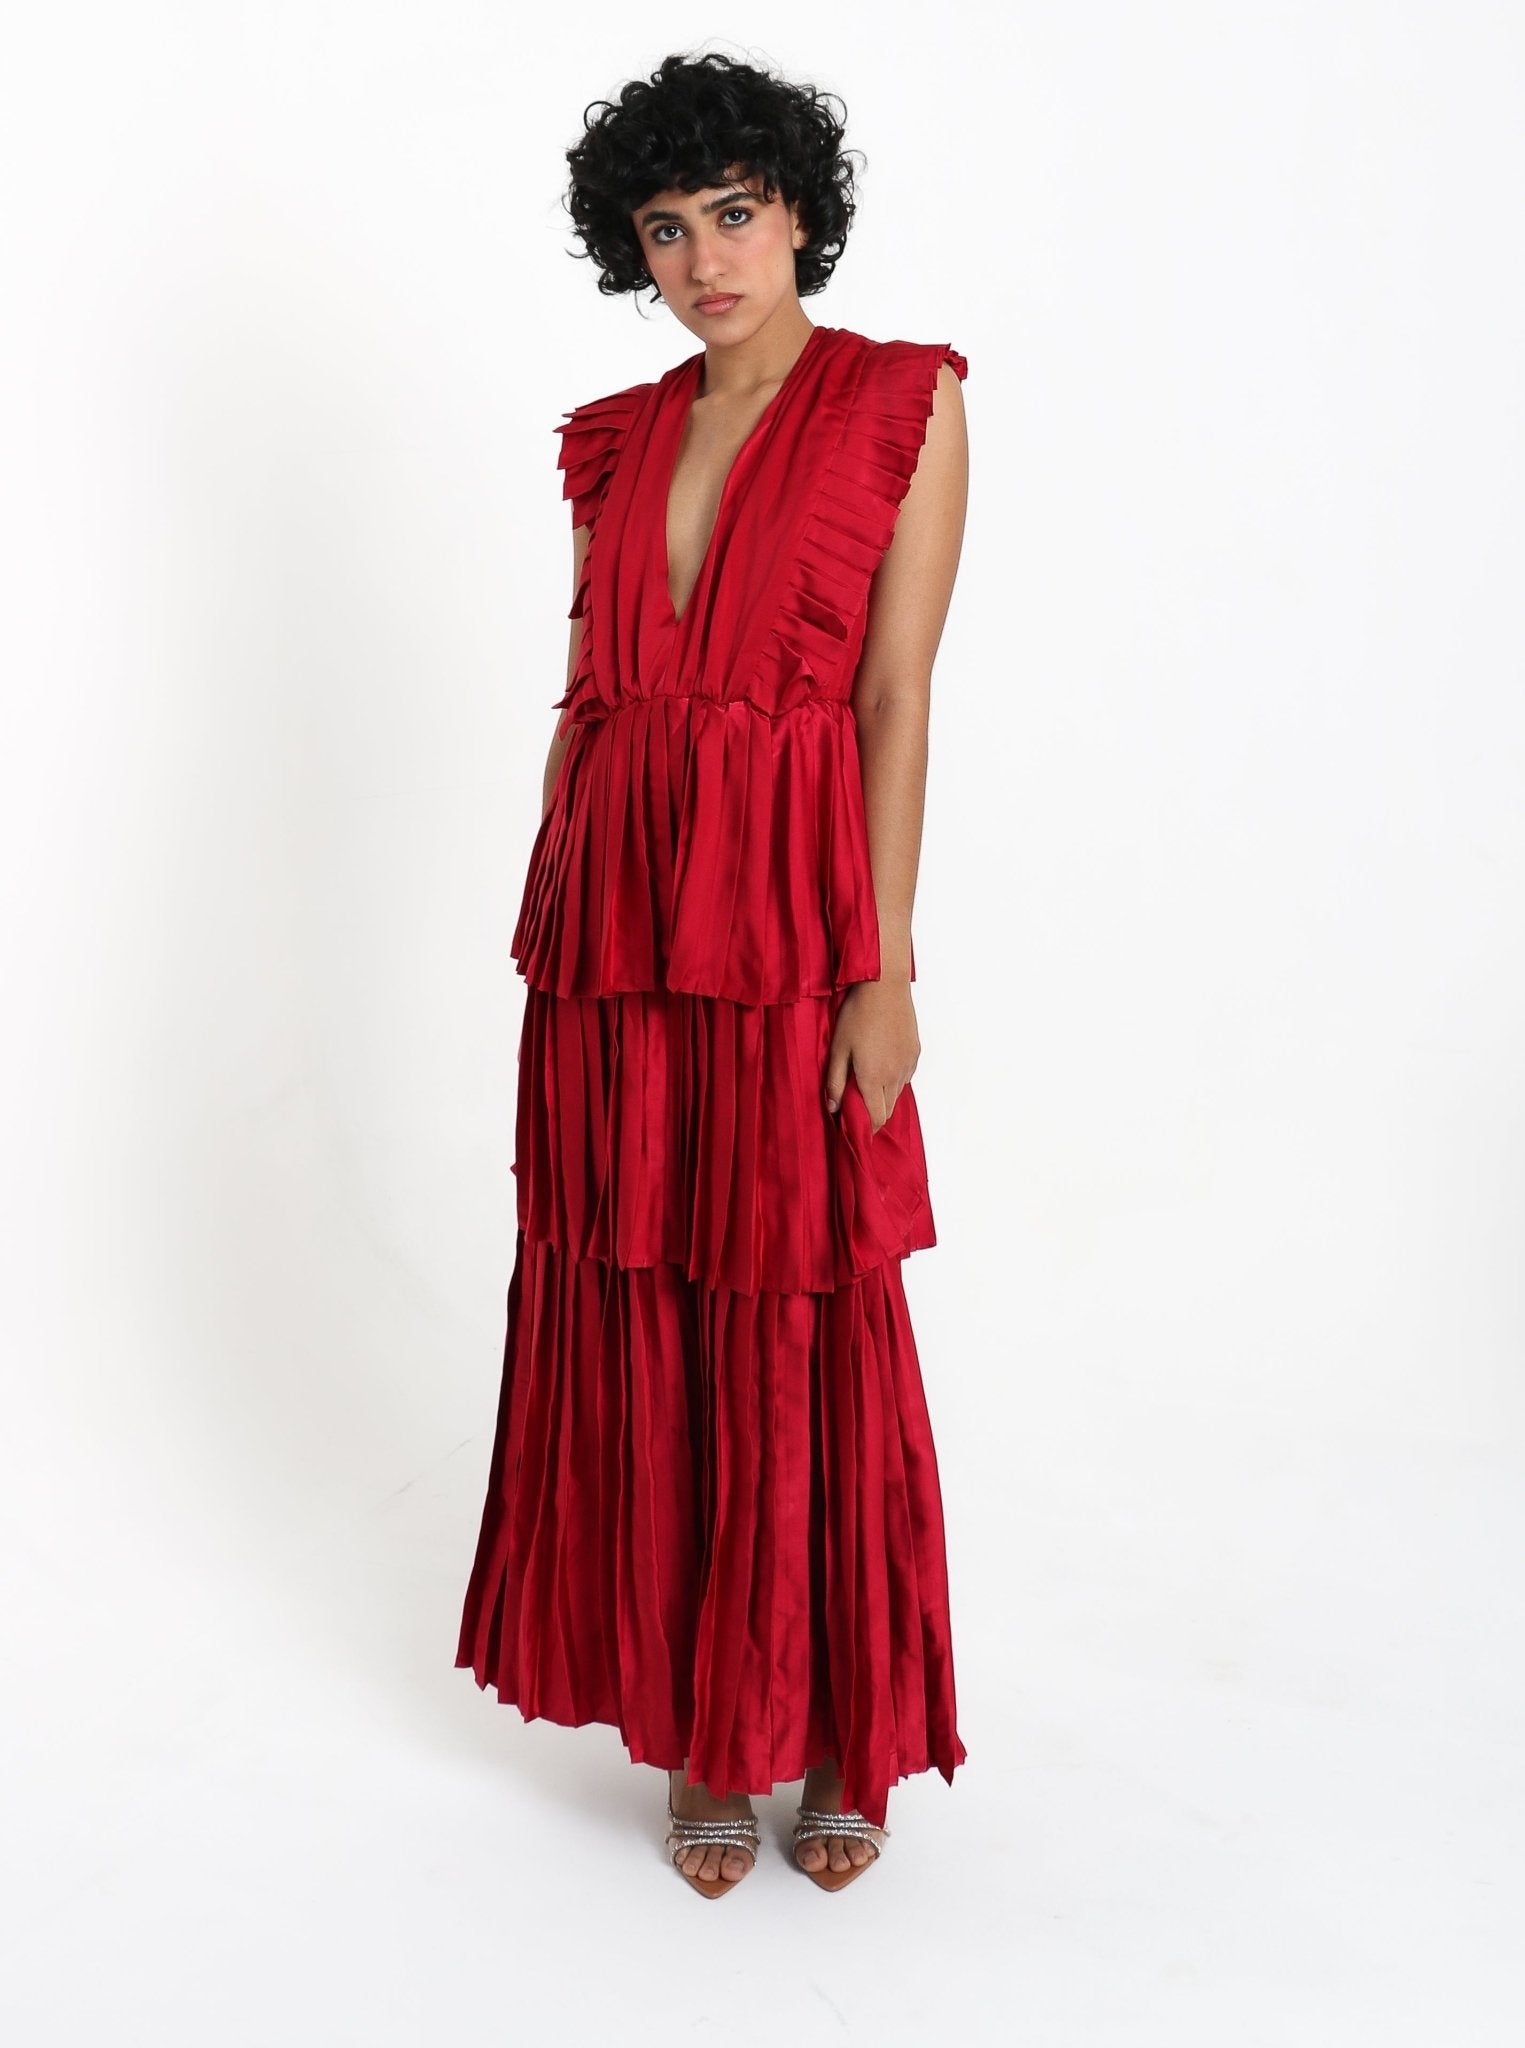 Diora - rojo - Cindel vestidos maxi, midi, mini, para toda ocasion, largos, de fiesta, de boda